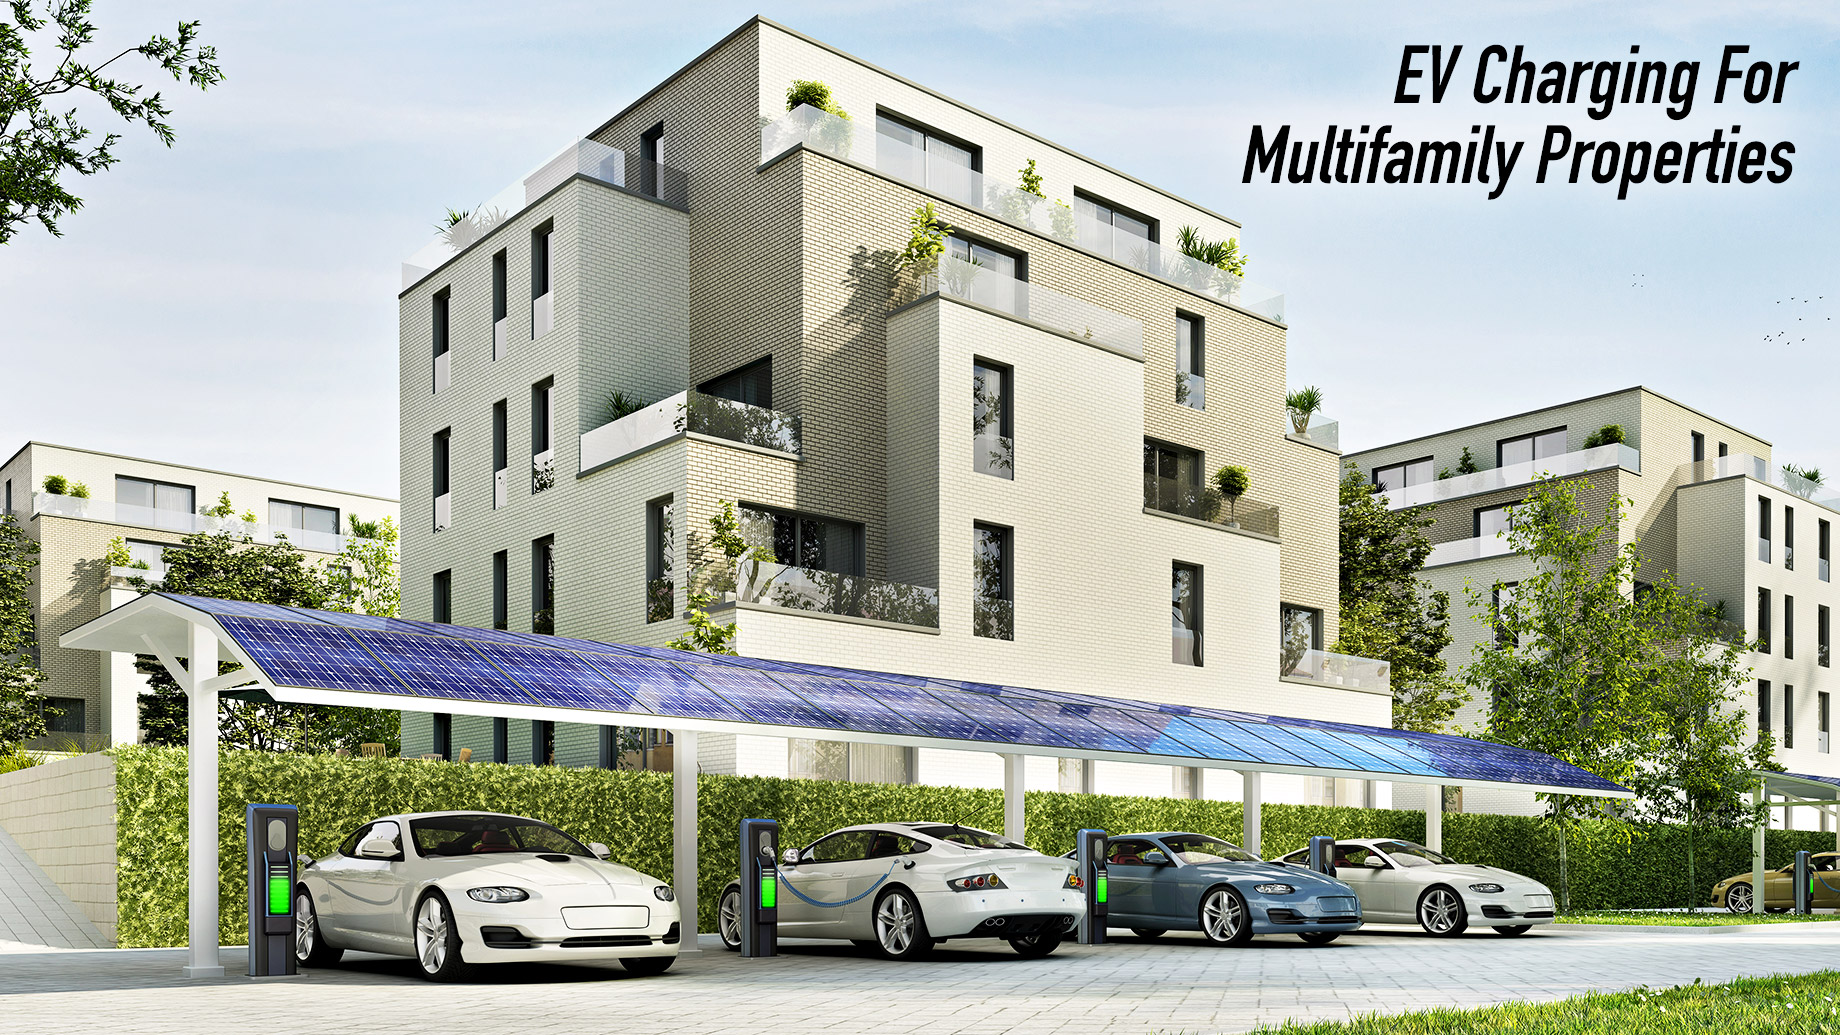 EV Charging For Multifamily Properties